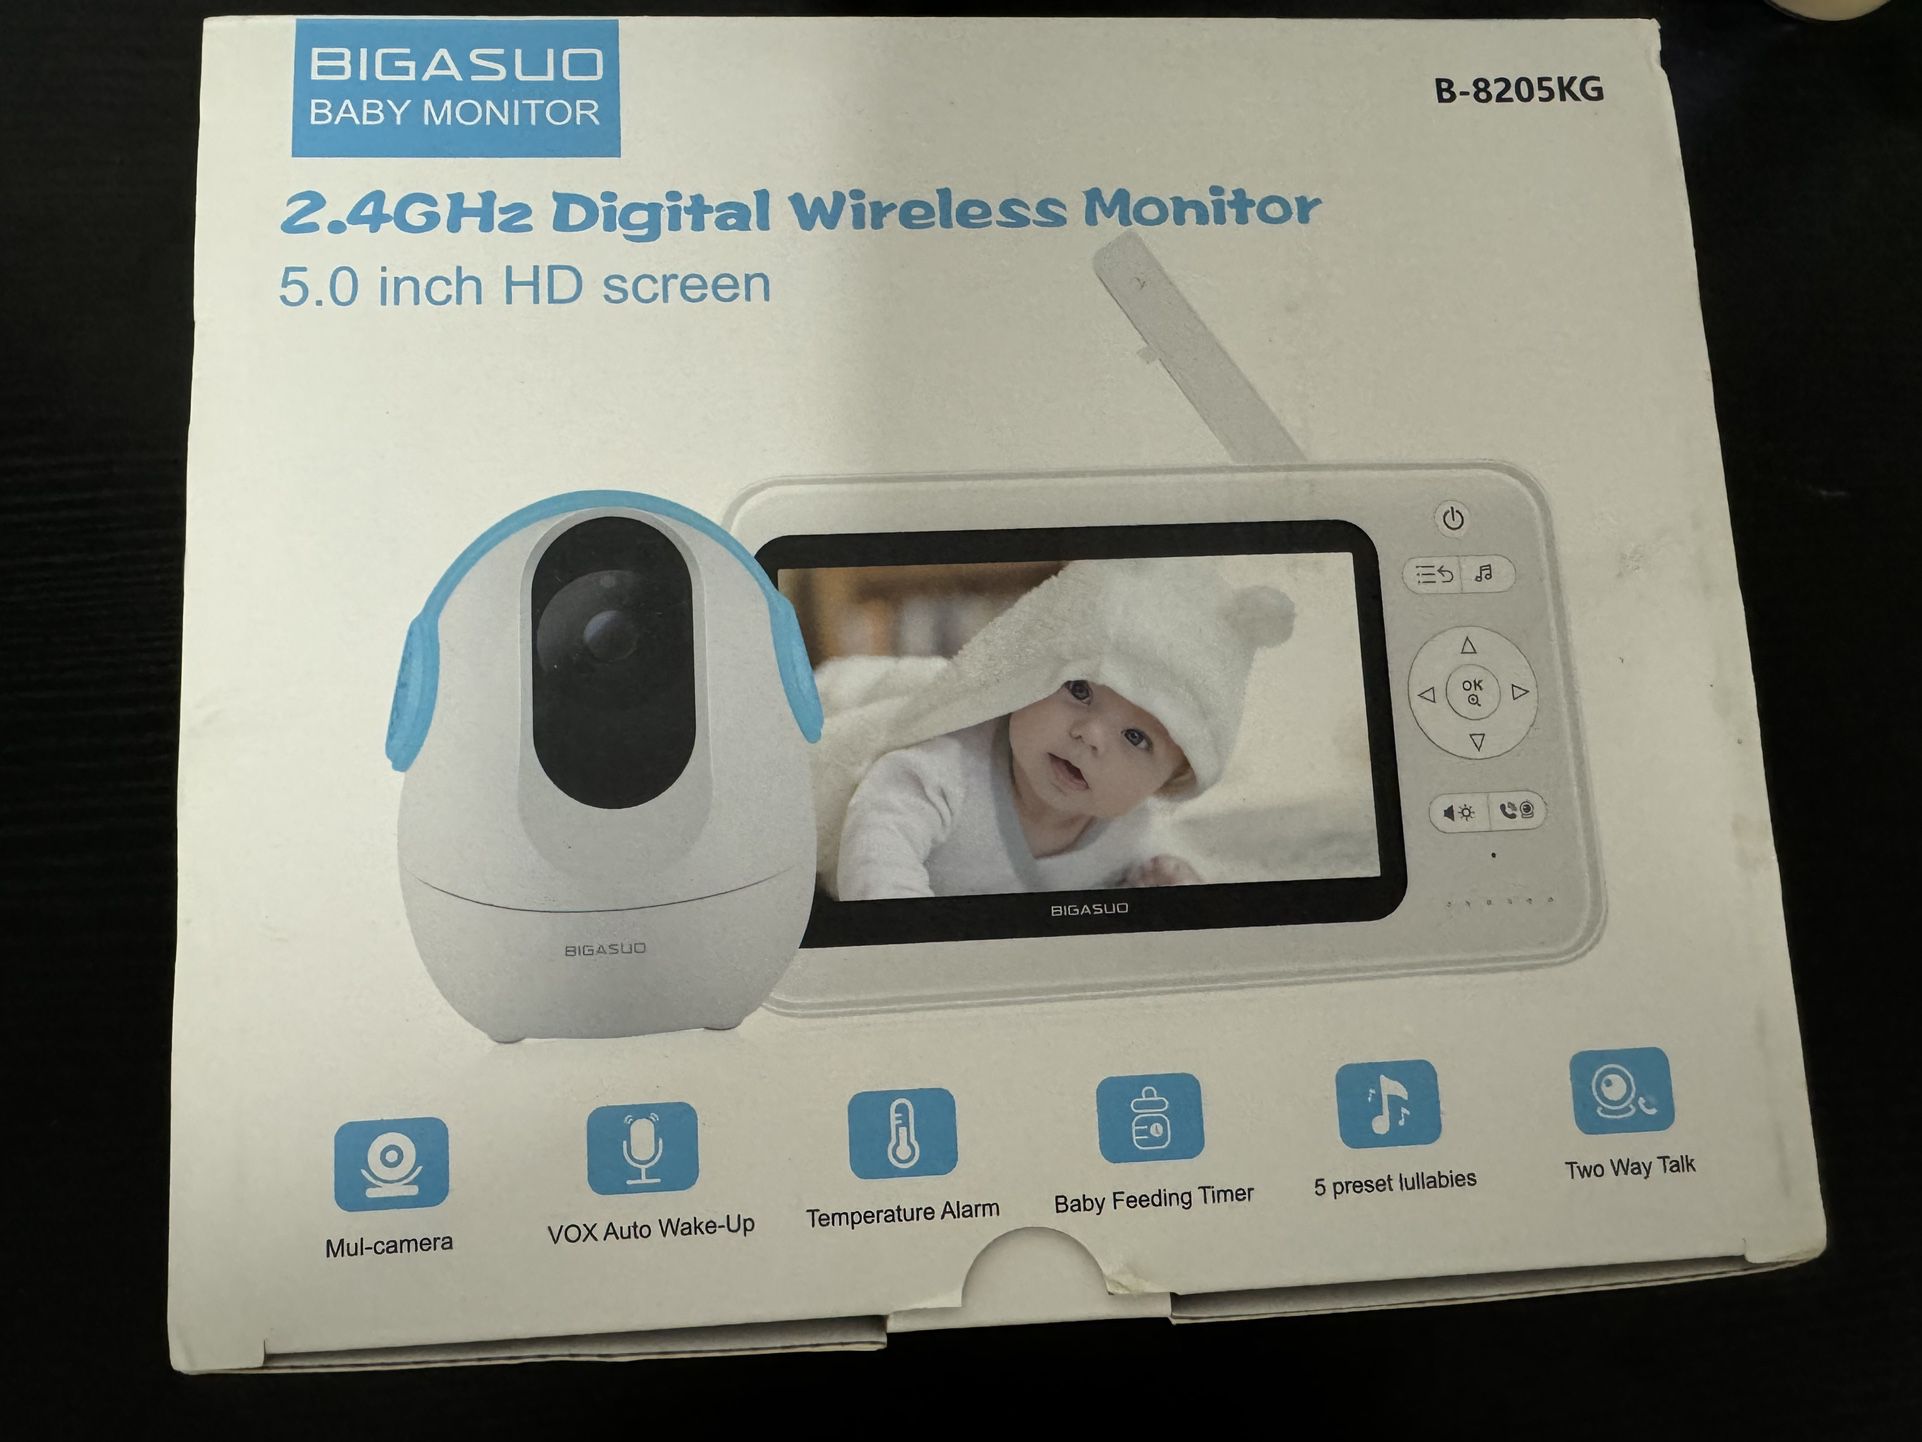 Brand new digital wireless monitor 5.0 inch hd screen